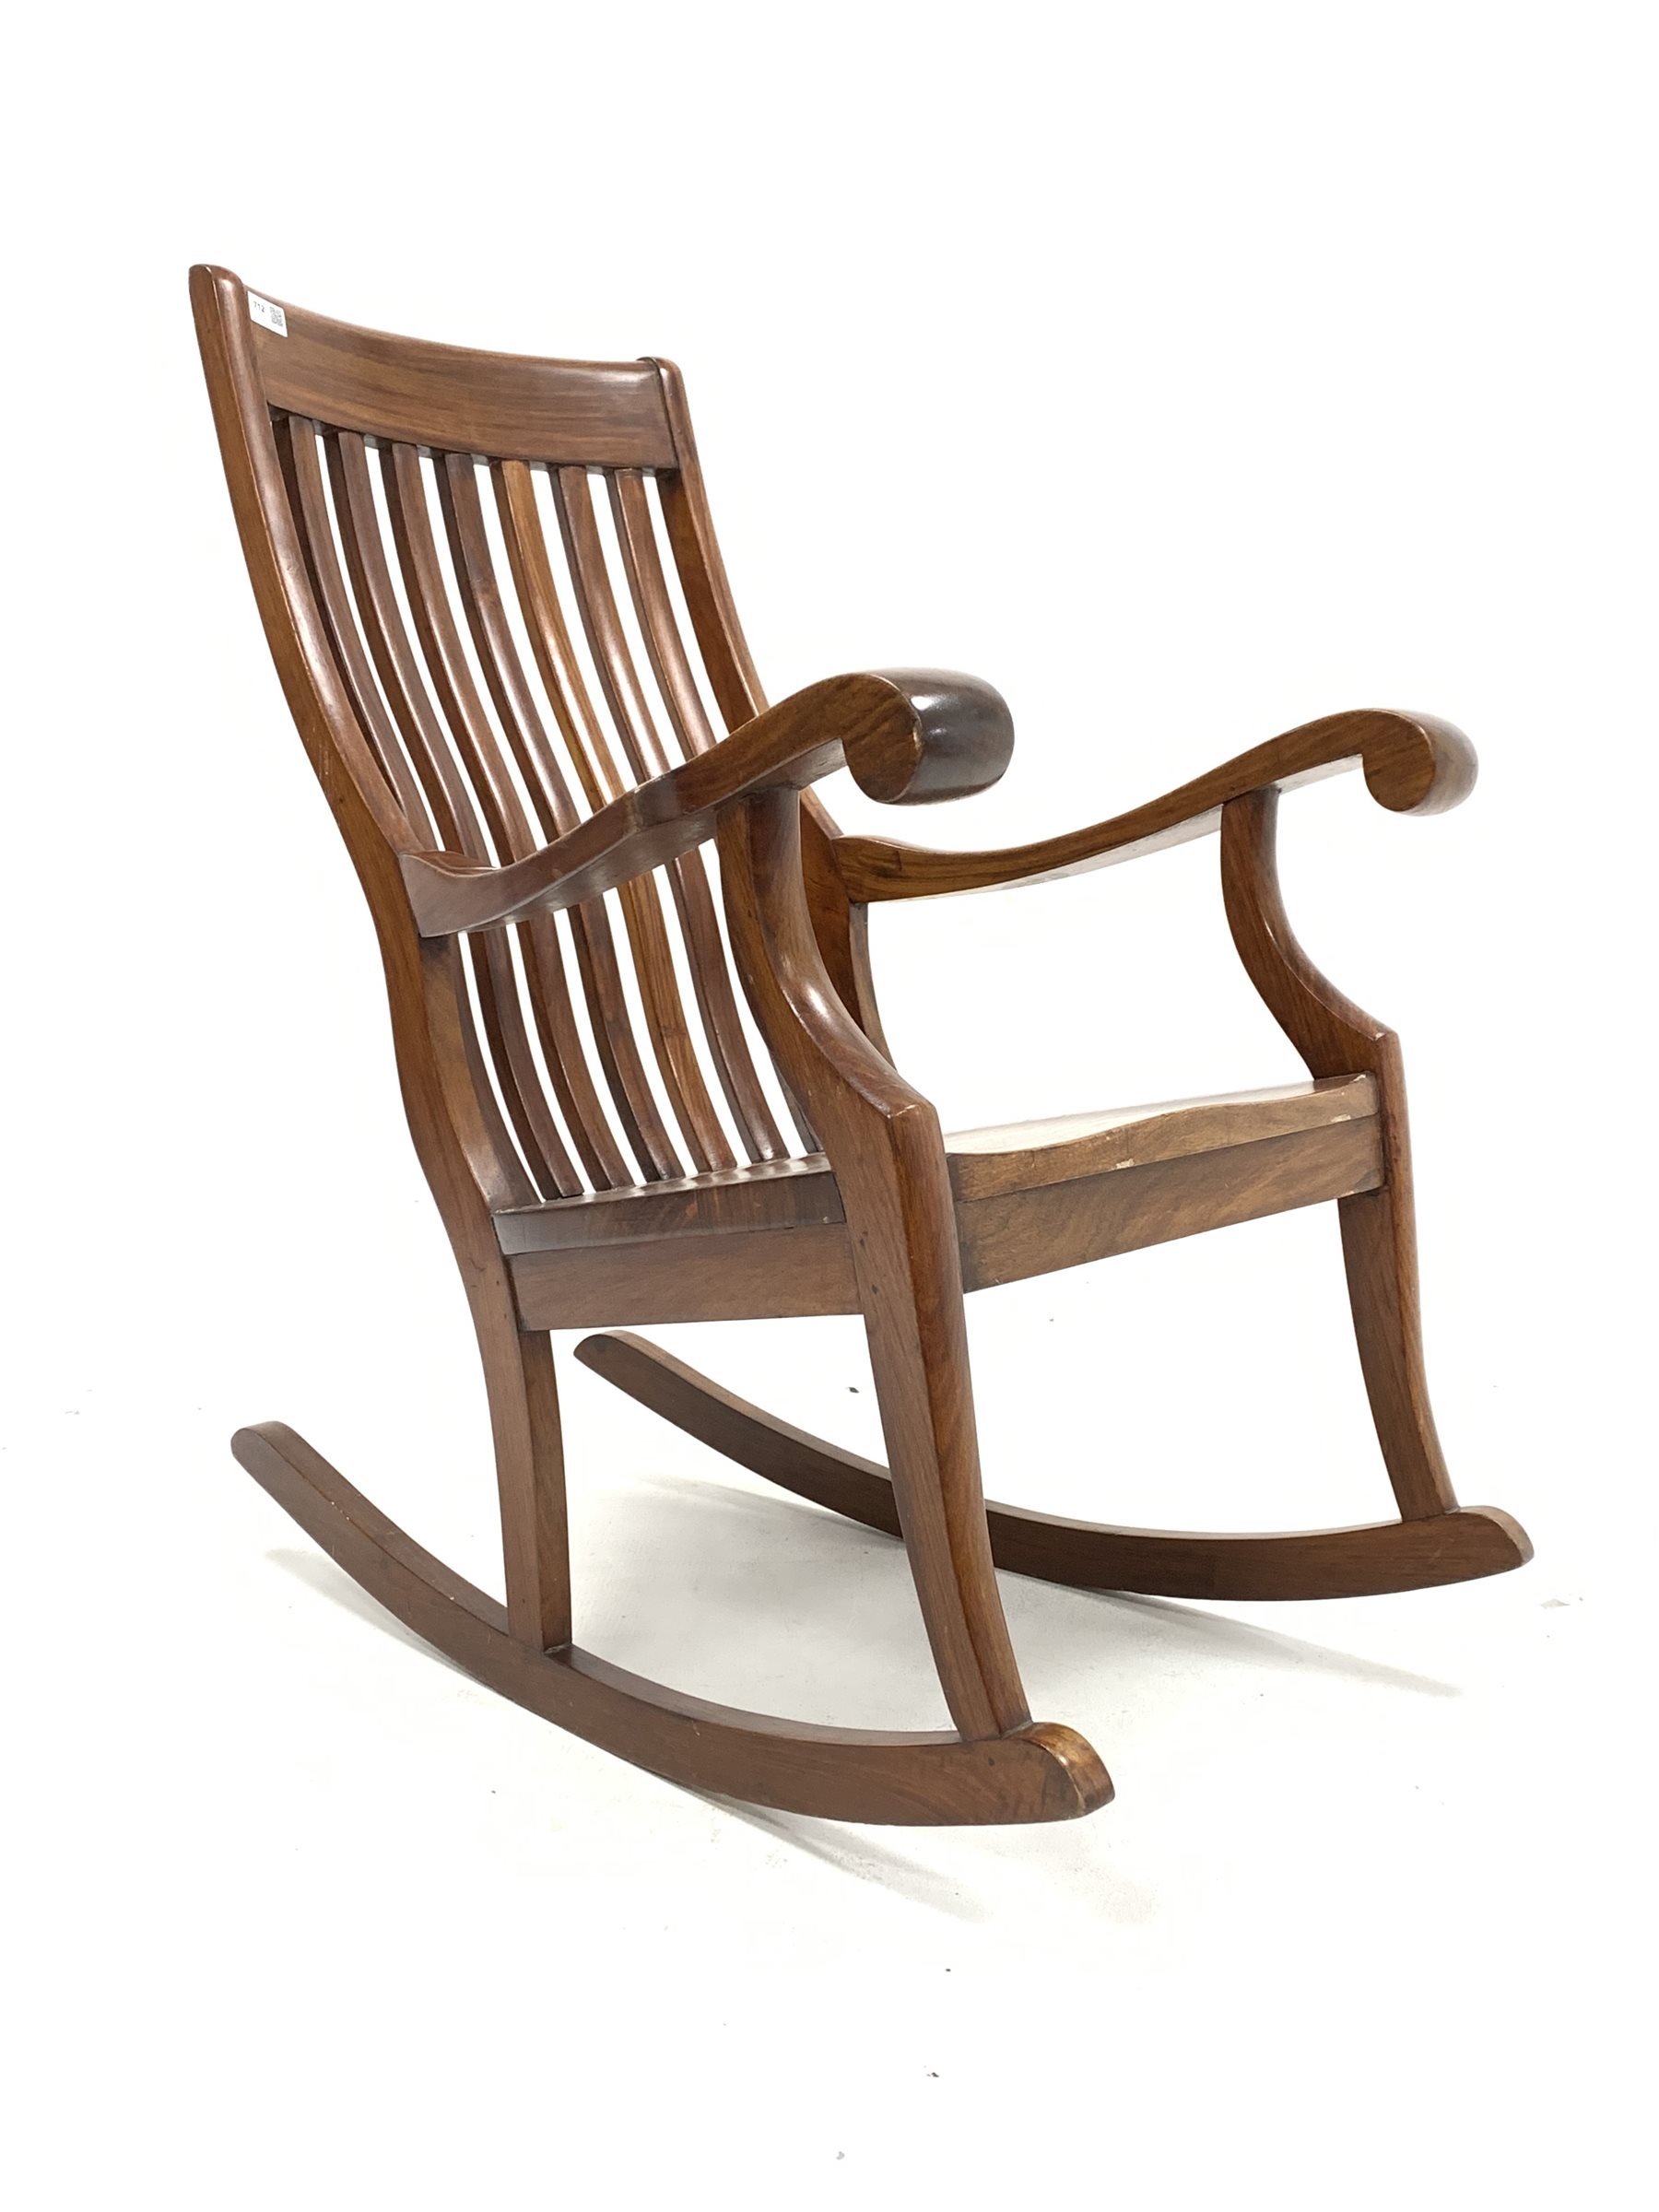 20th century hardwood rocking chair - Image 2 of 3